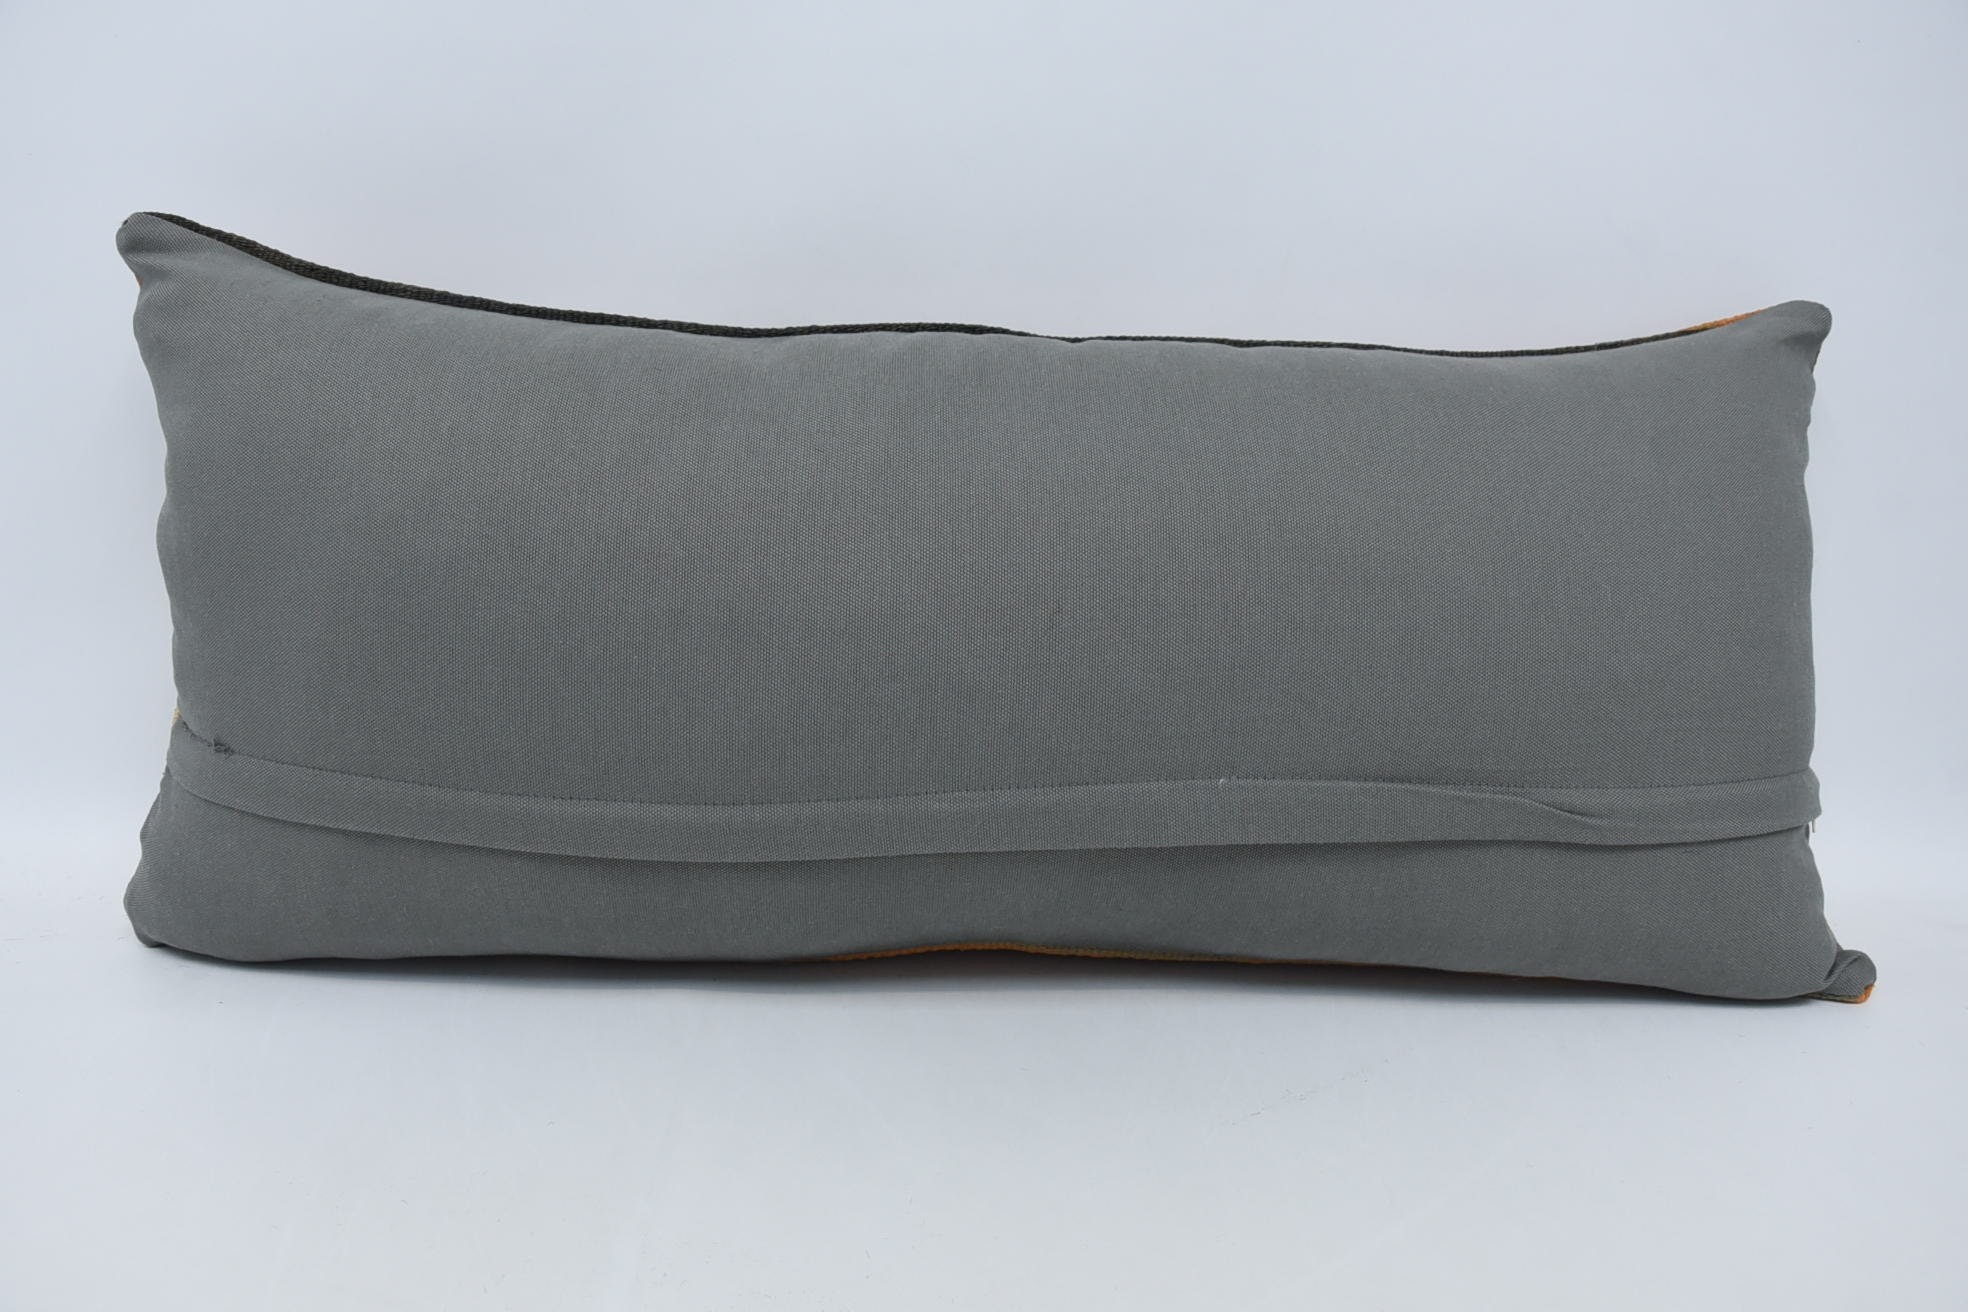 Outdoor Bolster Pillow, Throw Kilim Pillow, Turkish Kilim Pillow, 16"x36" Beige Cushion Cover, Ethnical Kilim Rug Pillow